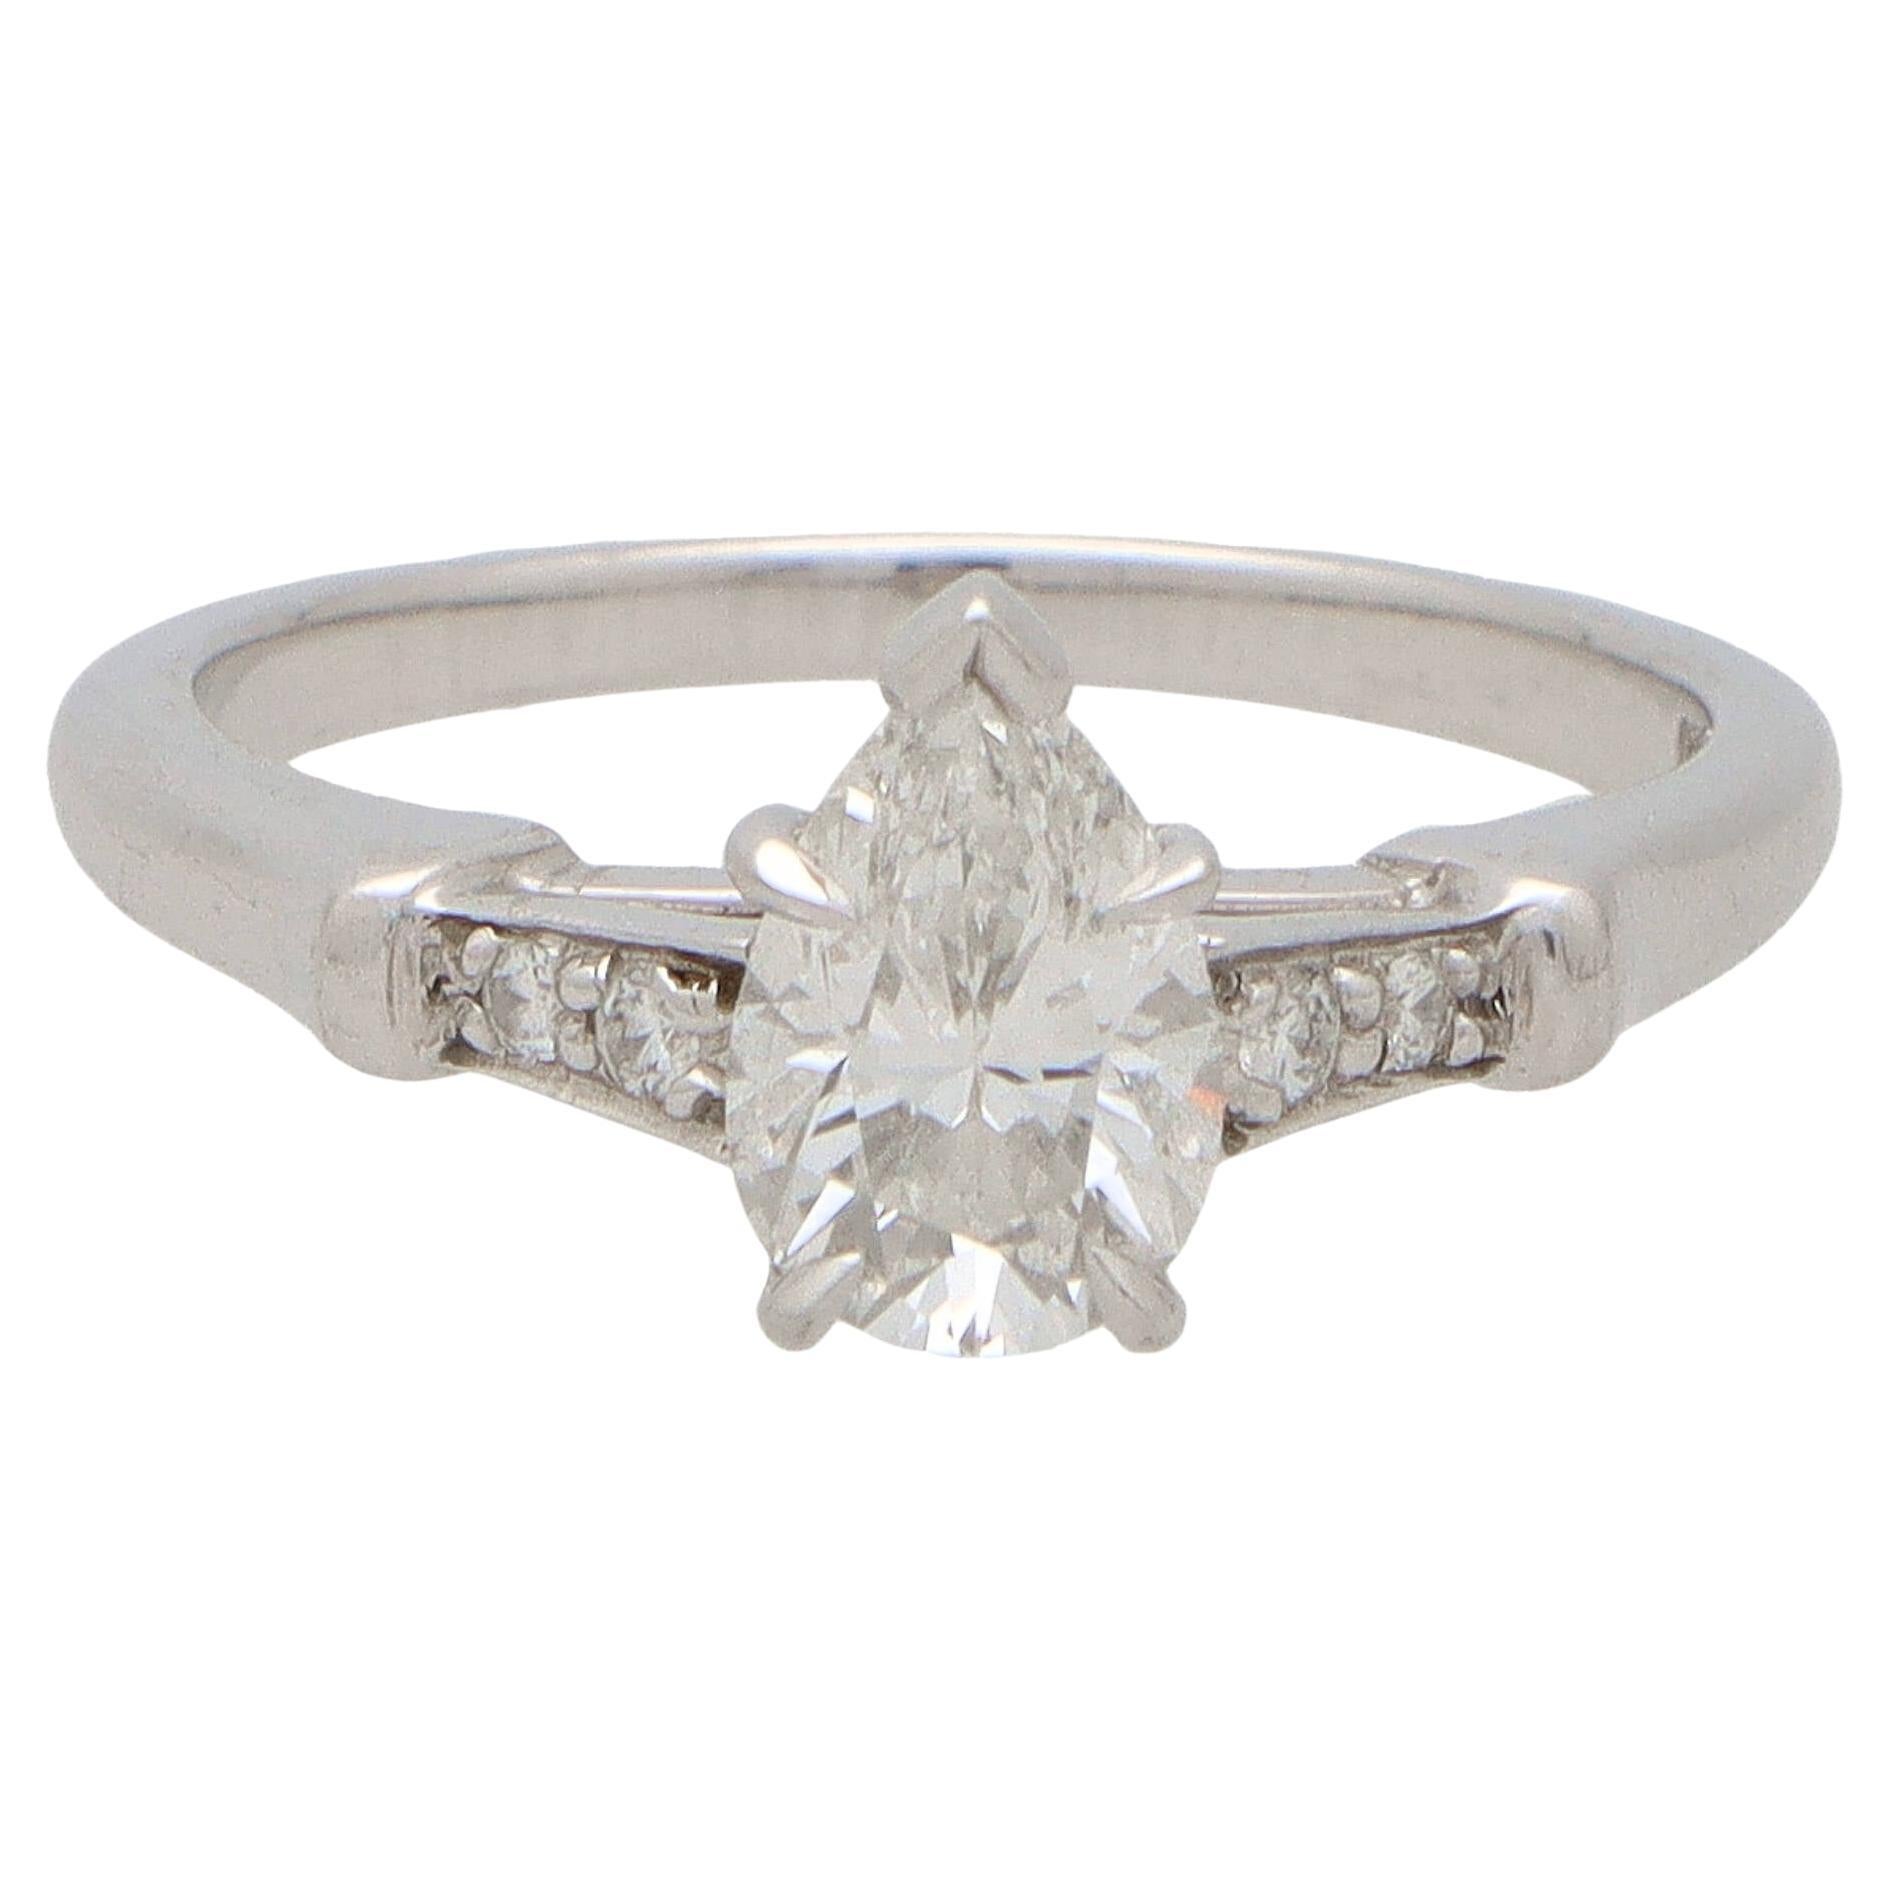 J Lo's Pink Harry Winston Engagement Ring From Ben Affleck | POPSUGAR  Fashion